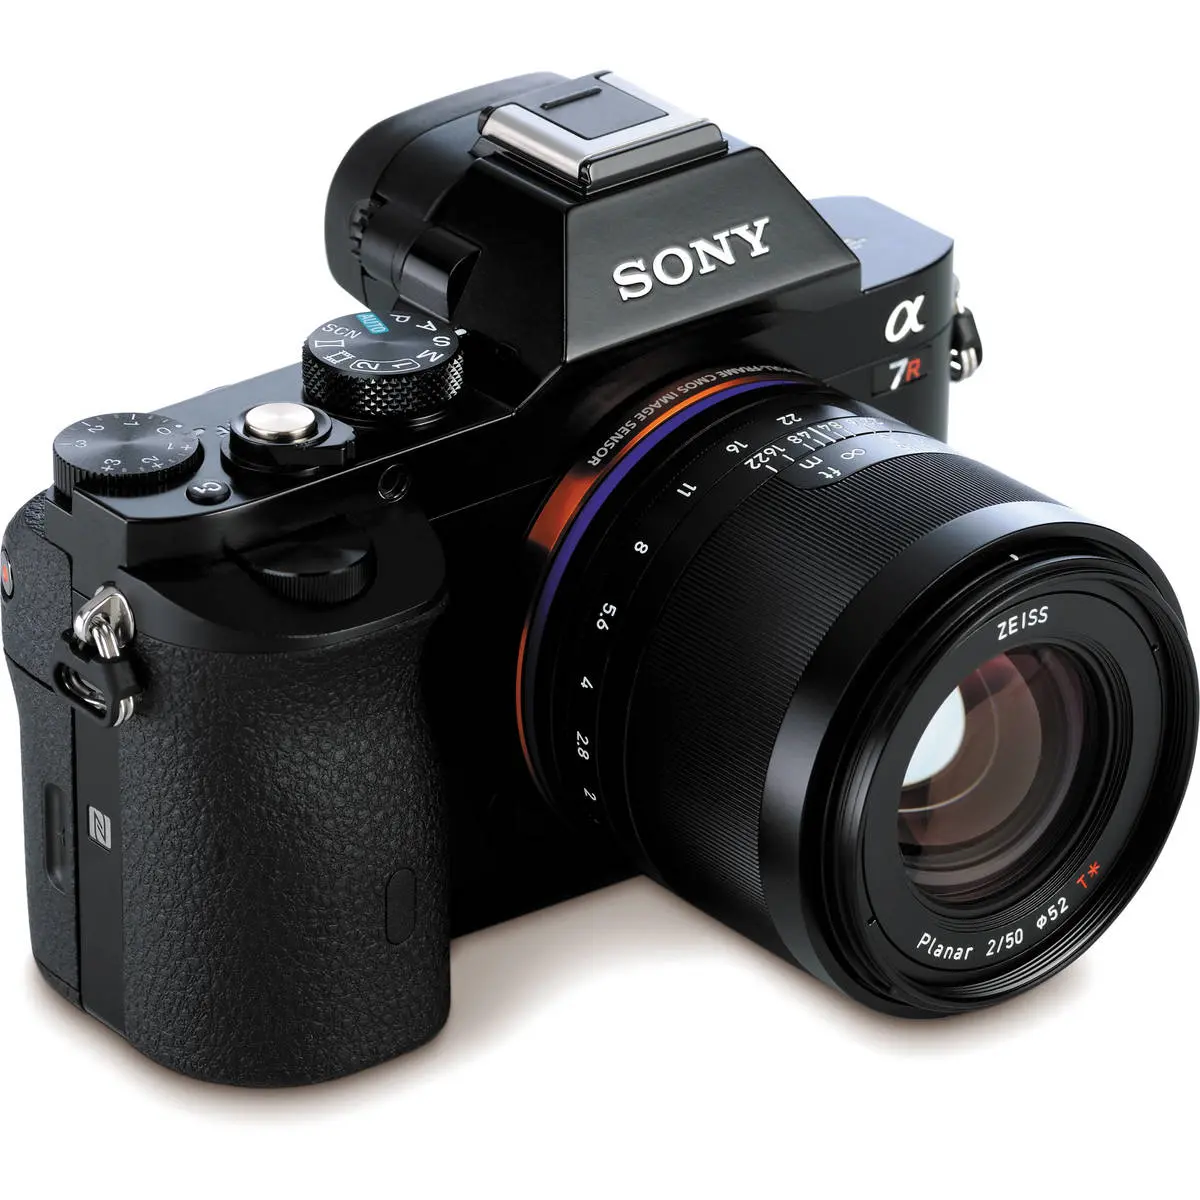 4. Carl Zeiss Loxia 50mm f/2 Planar T* (Sony E-Mount) Lens